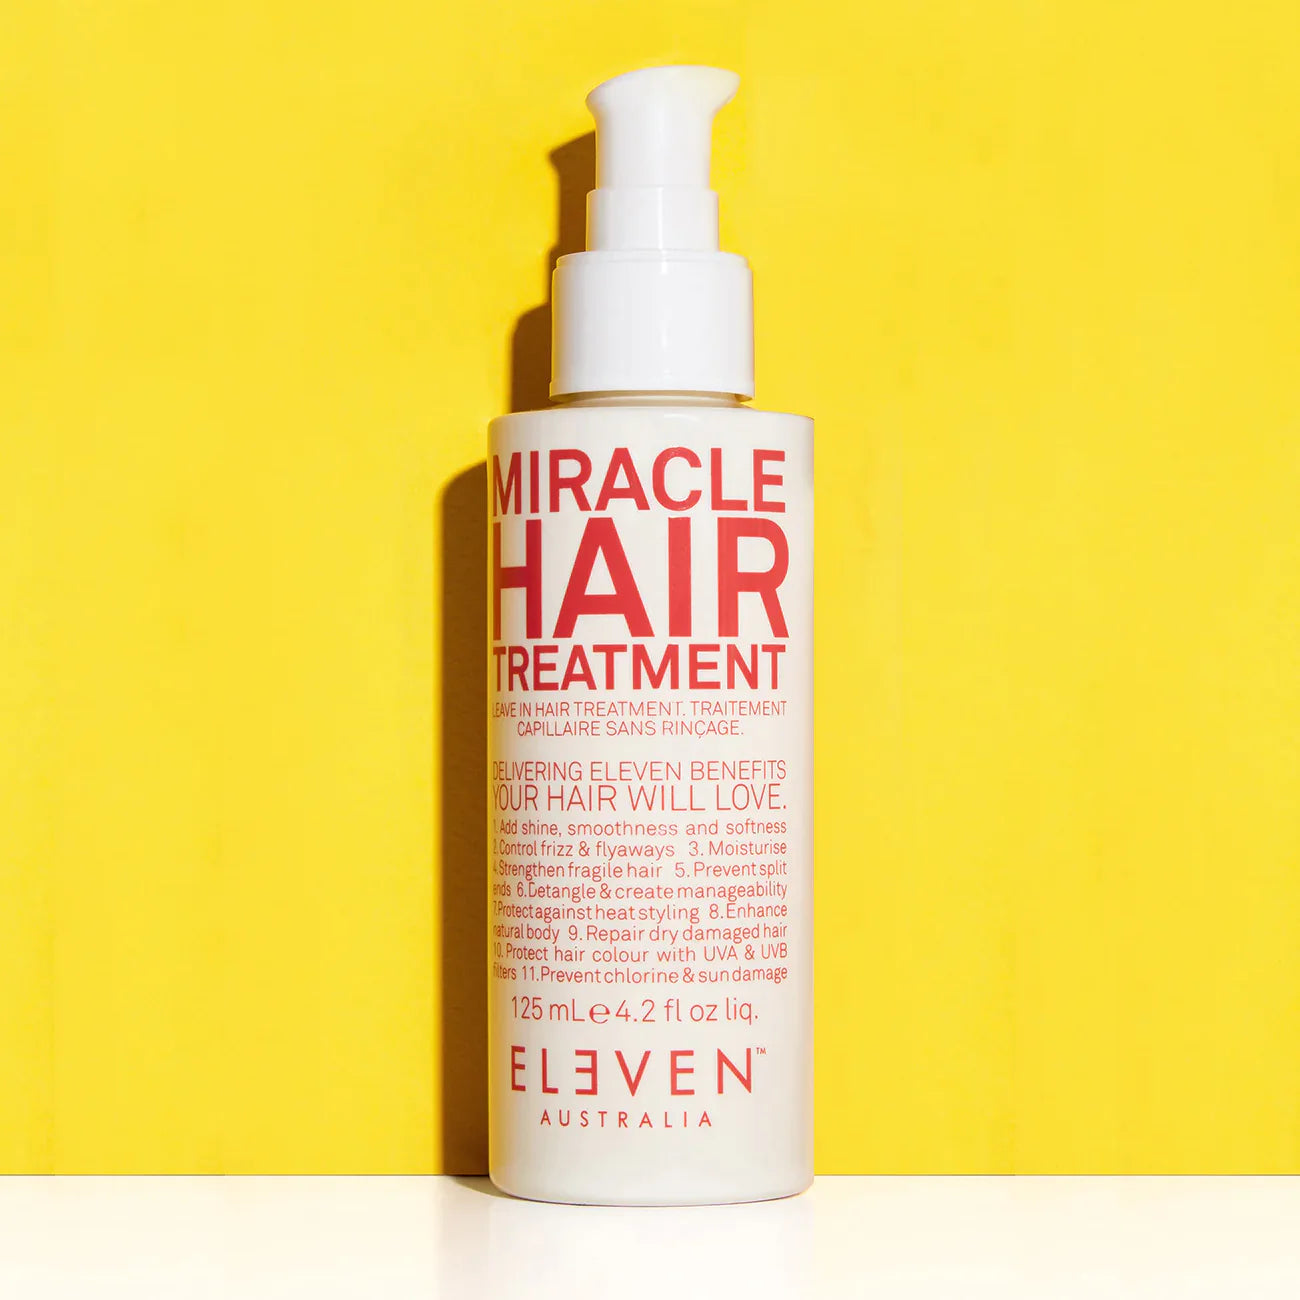 ELEVEN Australia Miracle Hair Treatment 125ml 4